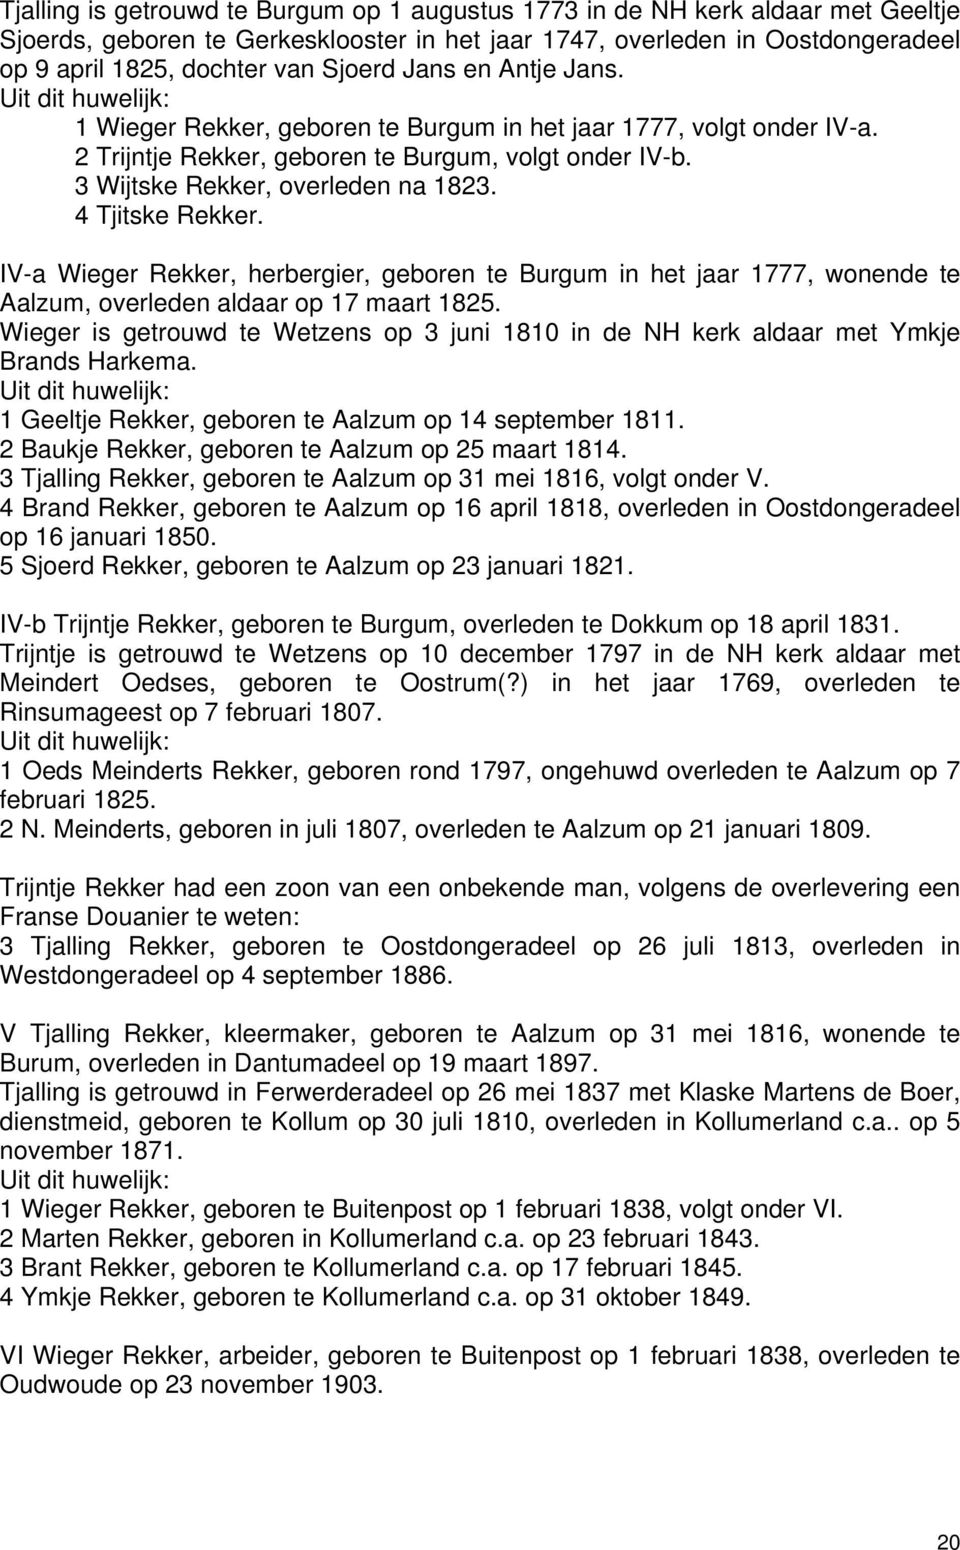 3 Wijtske Rekker, overleden na 1823. 4 Tjitske Rekker. IV-a Wieger Rekker, herbergier, geboren te Burgum in het jaar 1777, wonende te Aalzum, overleden aldaar op 17 maart 1825.